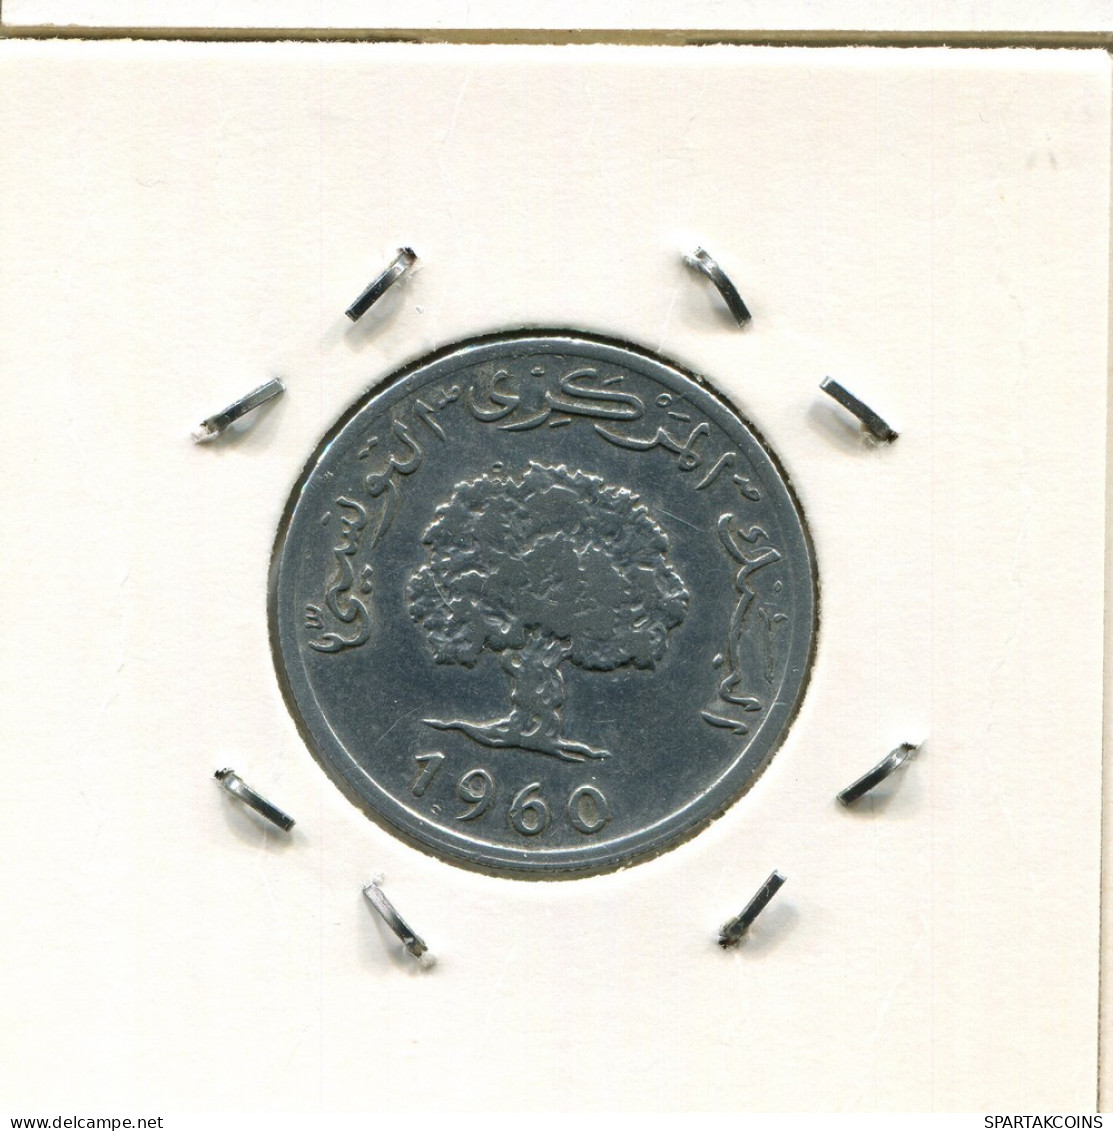 5 MILLIMES 1960 TÚNEZ TUNISIA Moneda #AP816.2.E.A - Tunisia